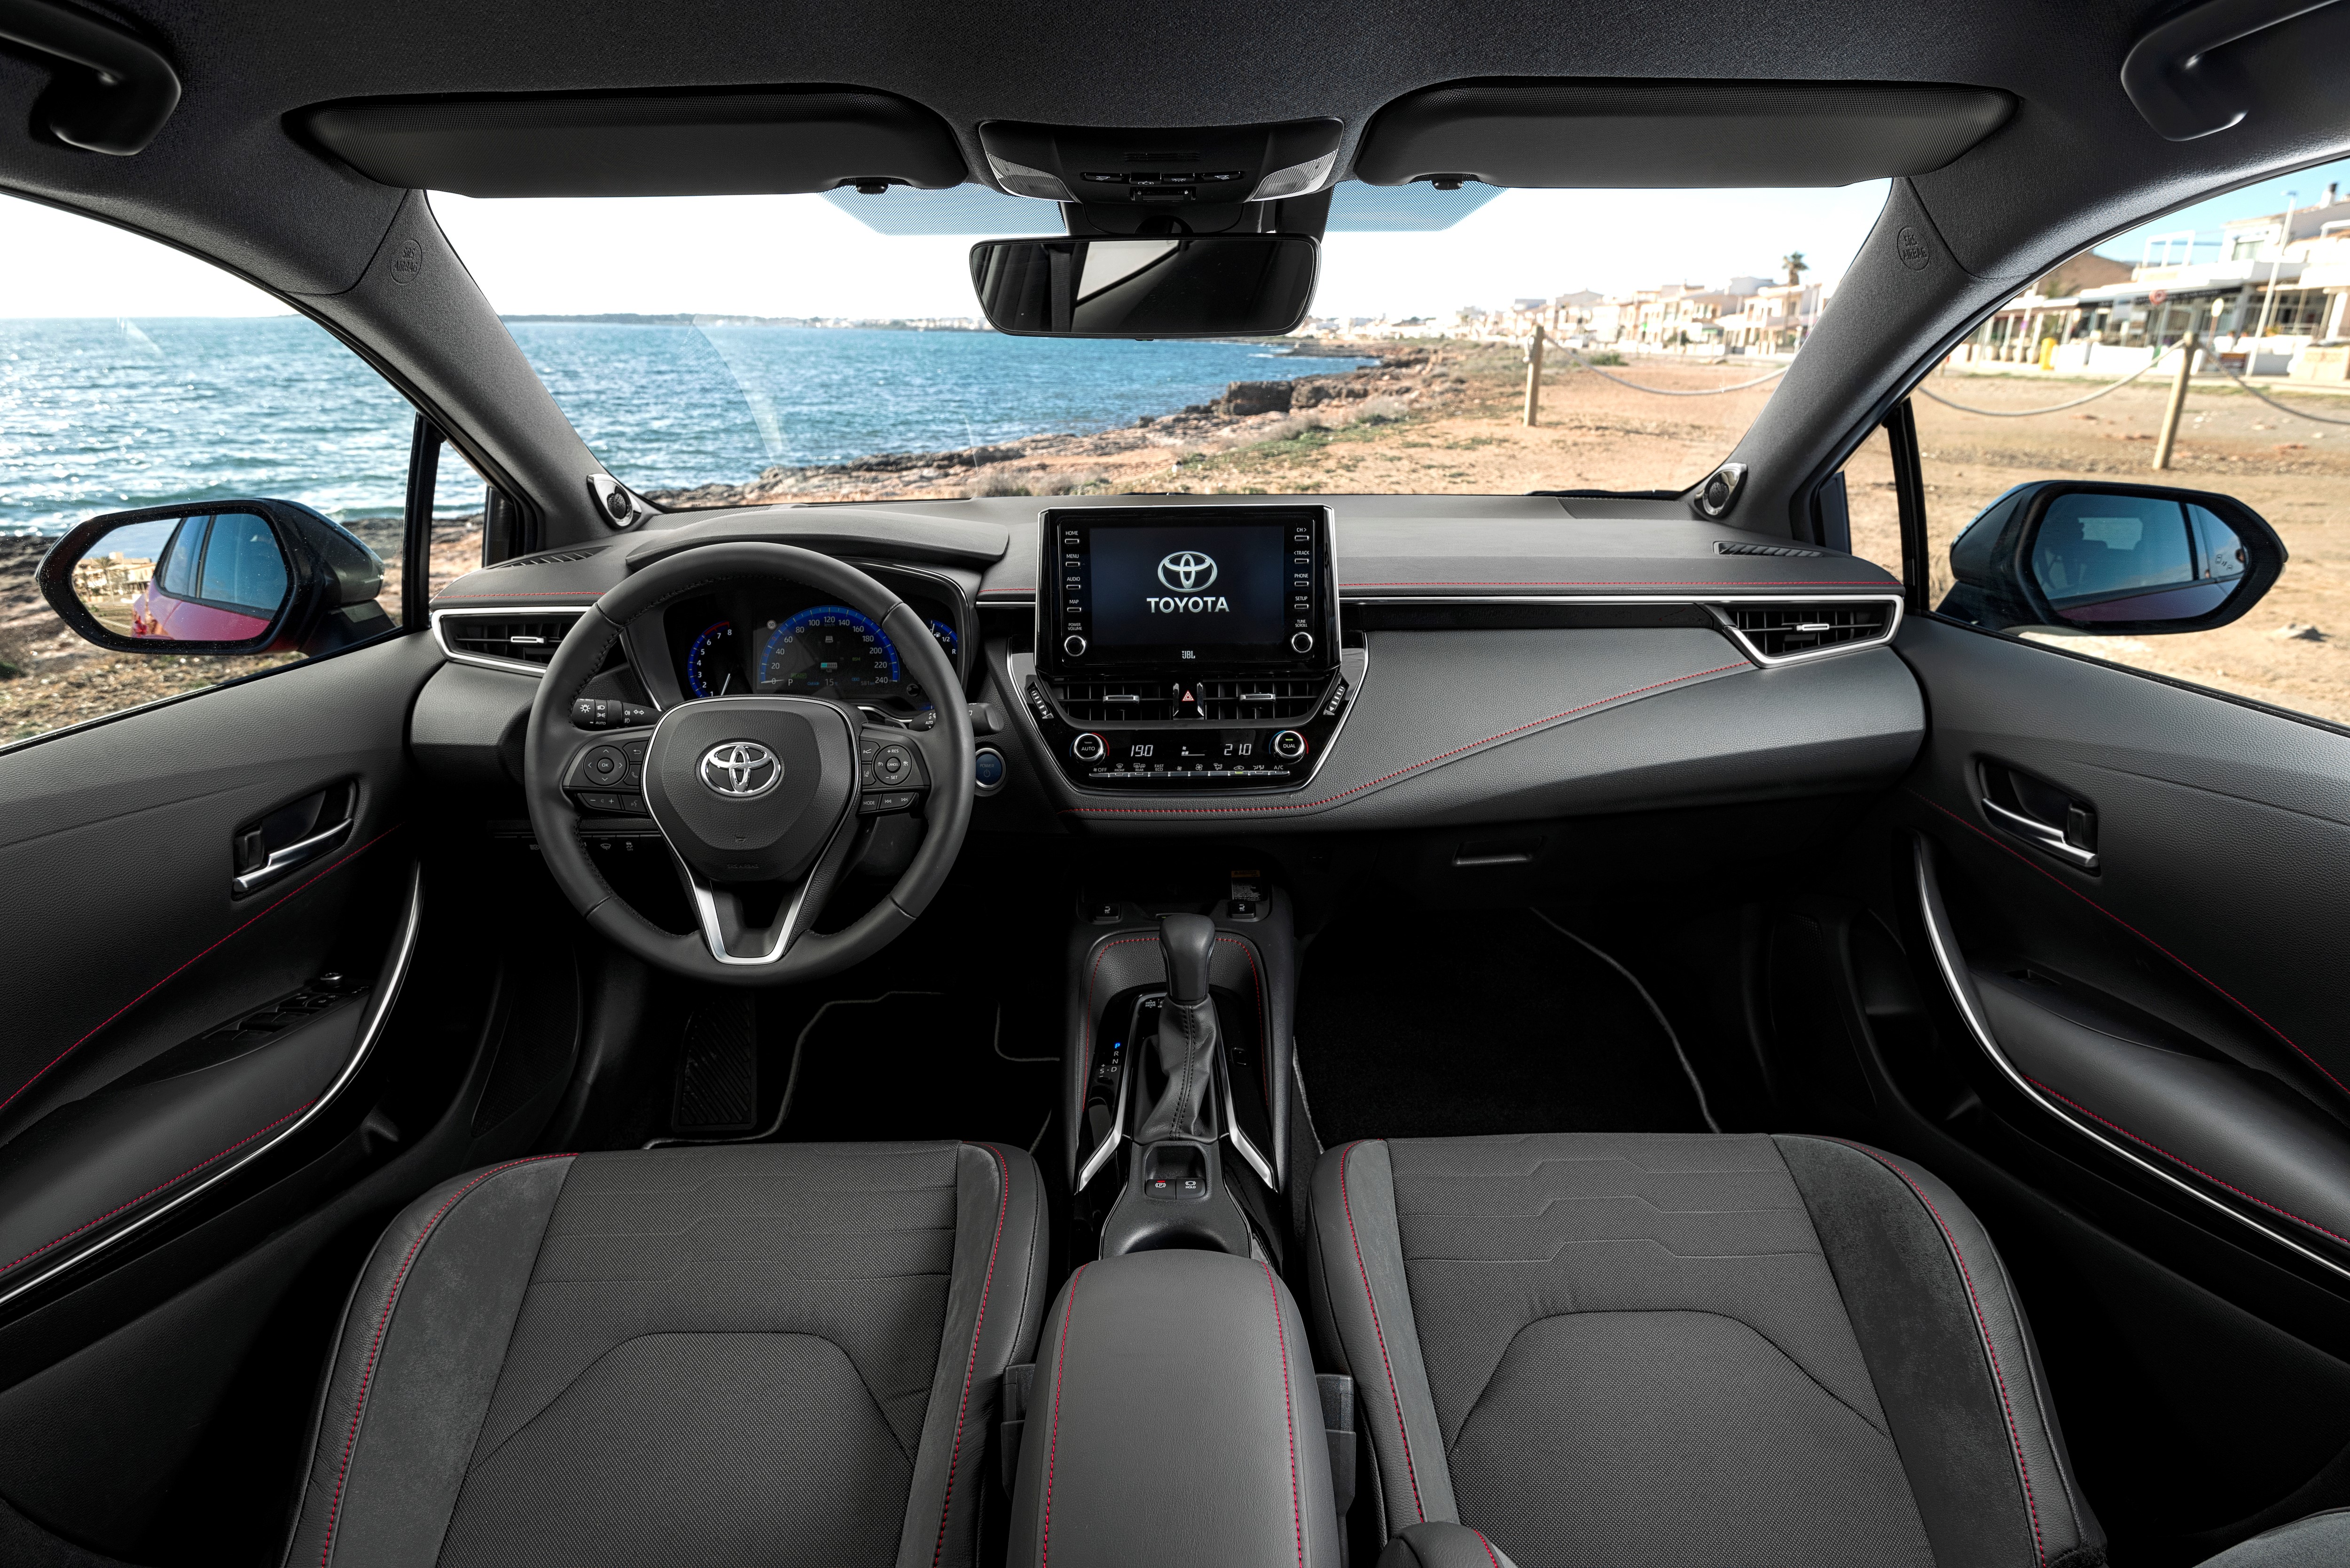 Toyota-Corolla-Hatchback-Hybrid-Details-1a.jpg (4.27 MB)